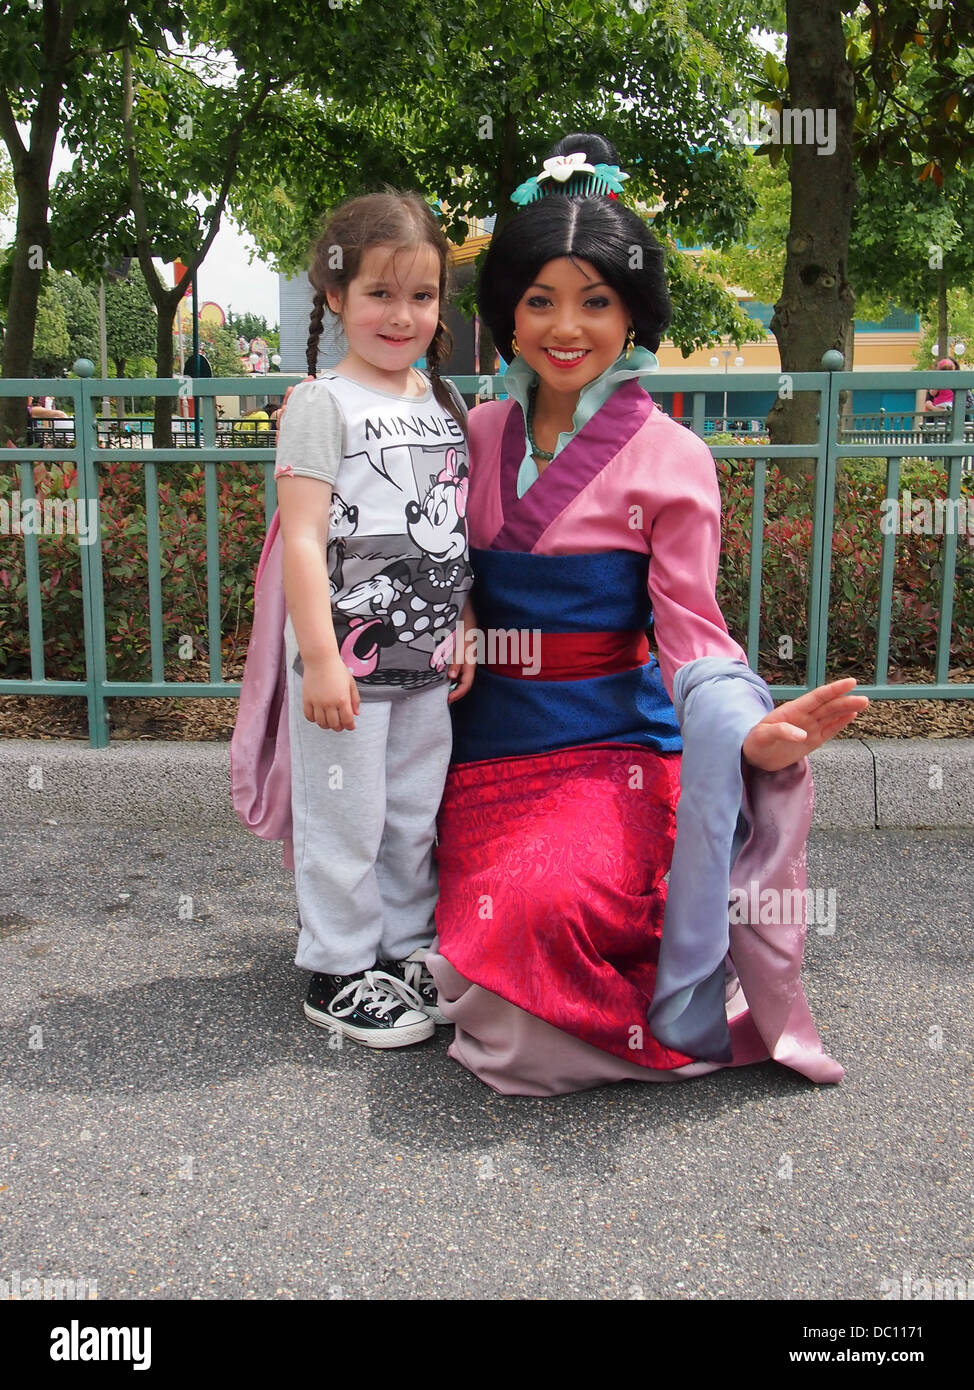 Disney Princess Mulan poses with a little girl at Disneyland Paris in  France Stock Photo - Alamy